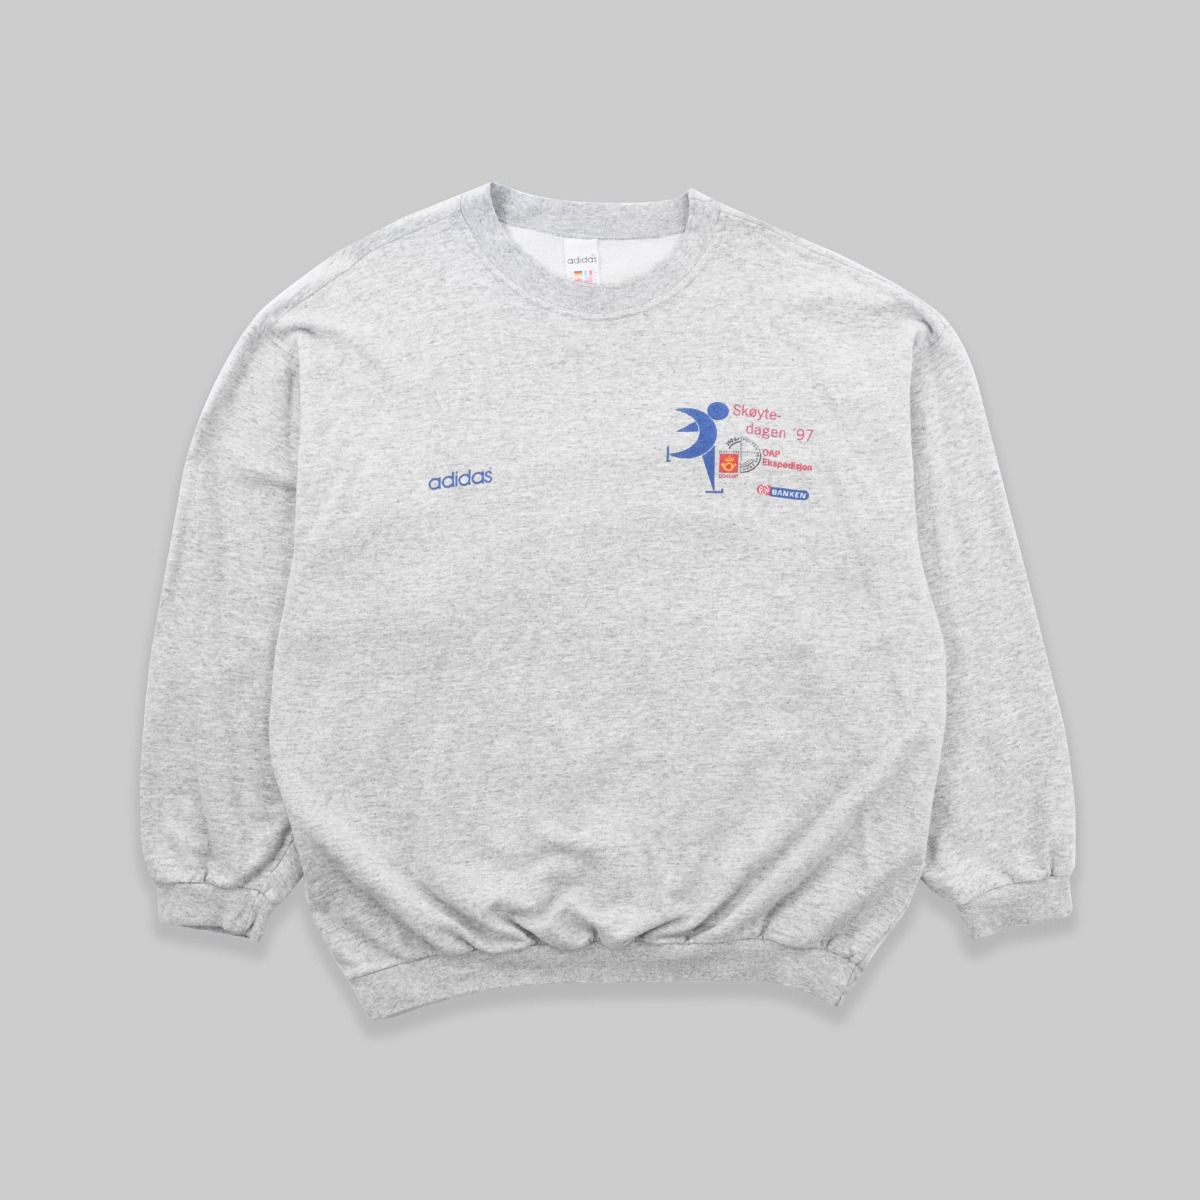 Adidas Skøyte-Dagen 1997 Sweatshirt